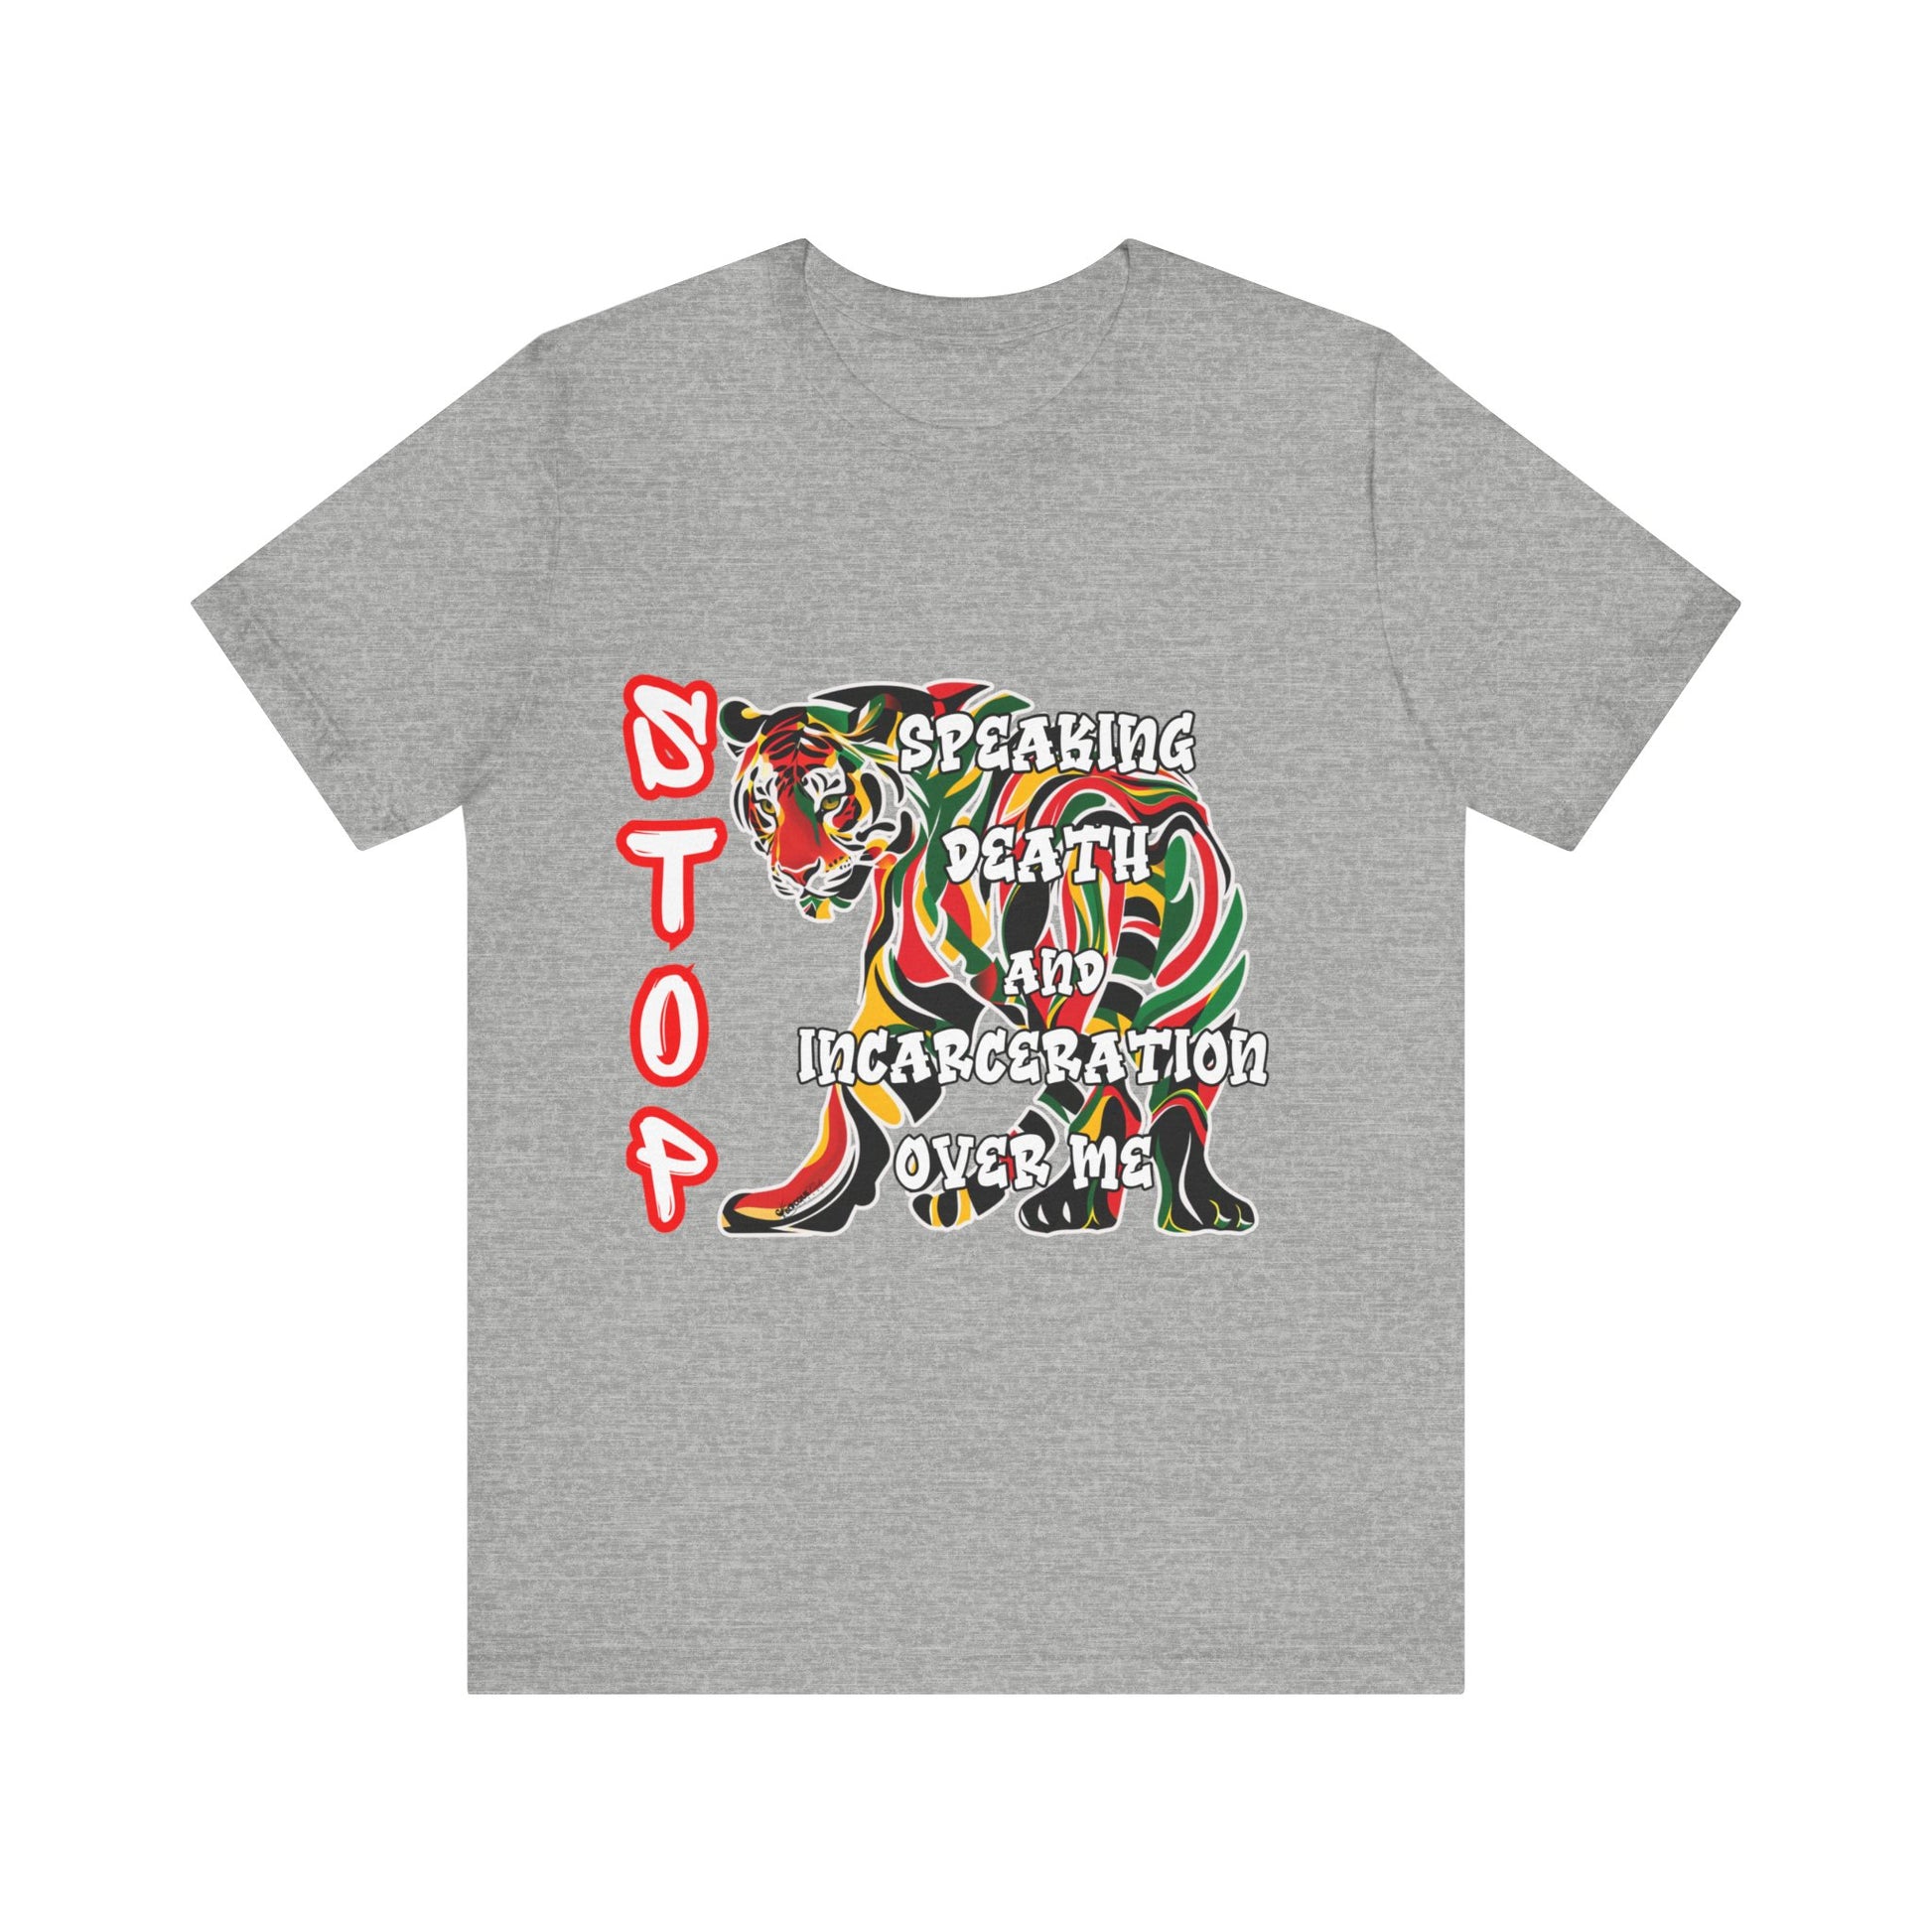 Stop Speaking Death Tee Shirt - Pan-African Tiger Art, Empowering Message Shirt, gray tee shirt